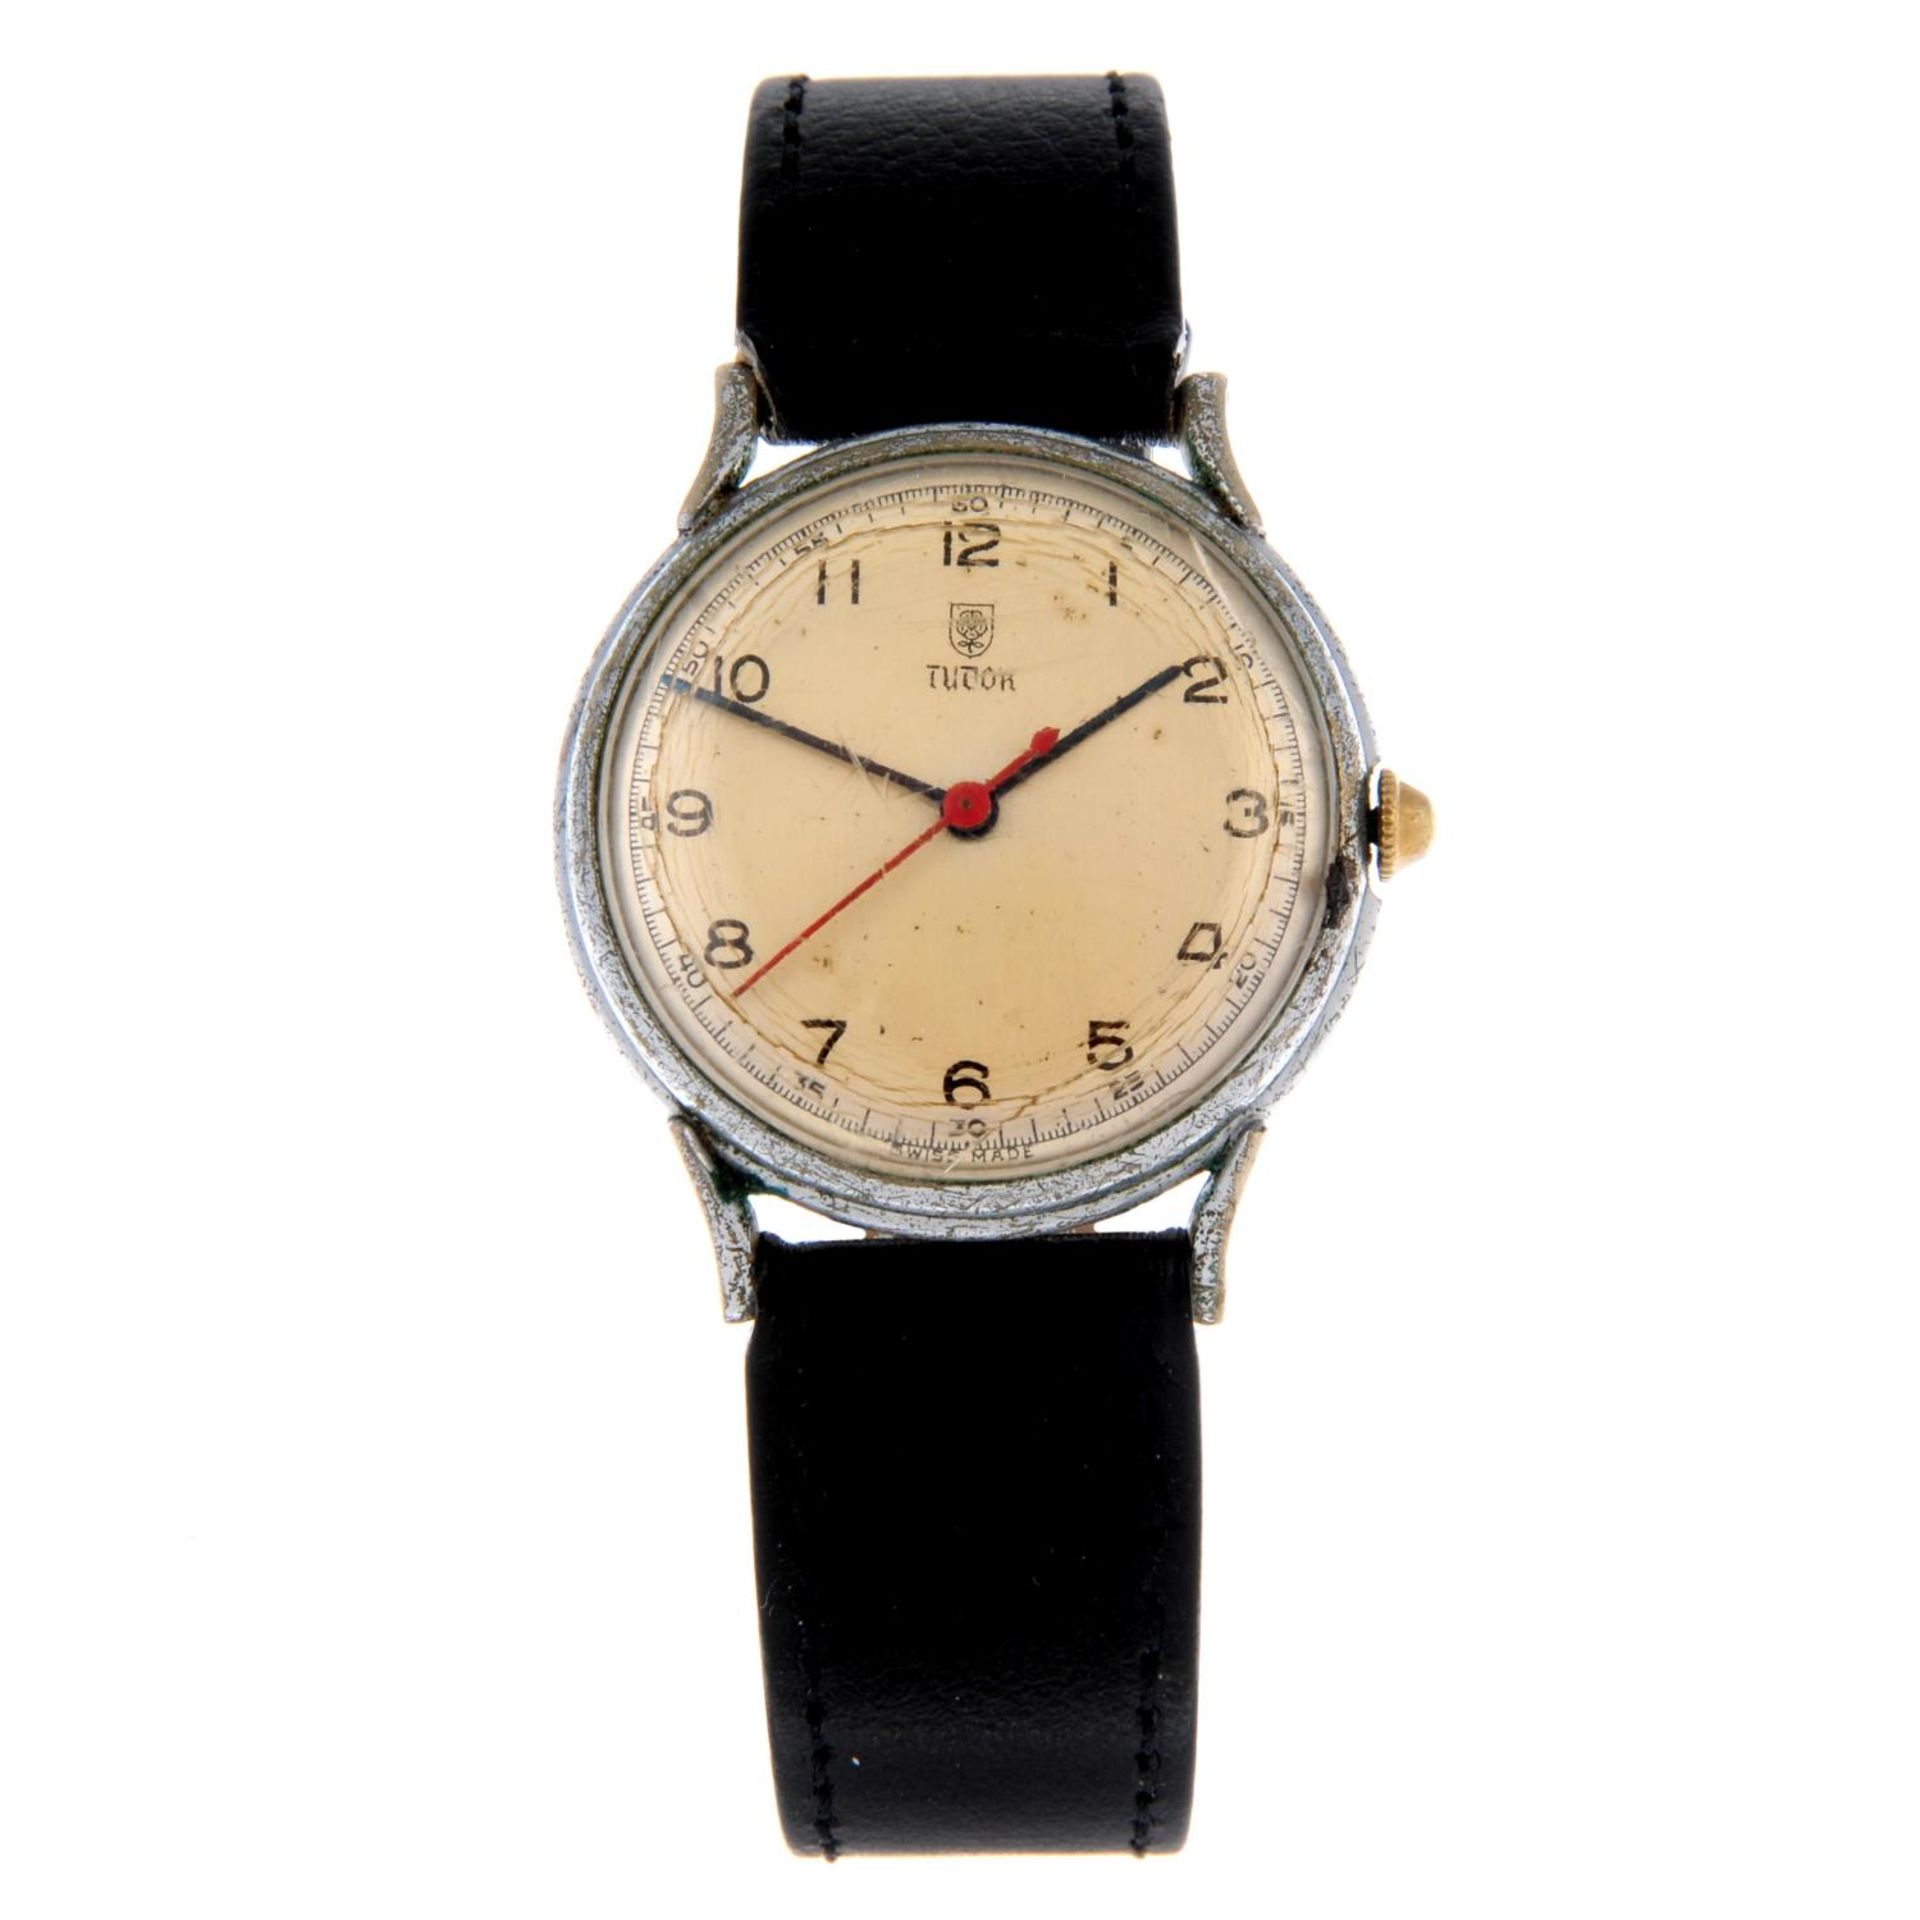 TUDOR - a wrist watch.